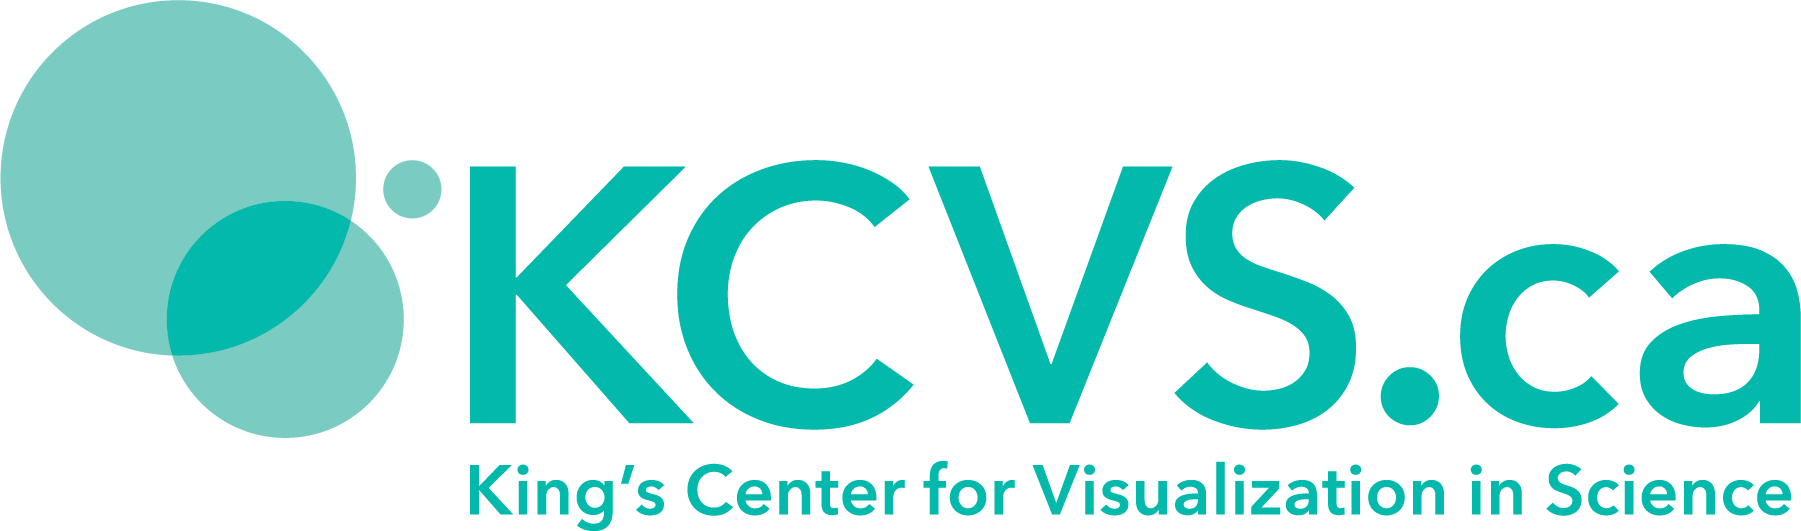 KCVS logo